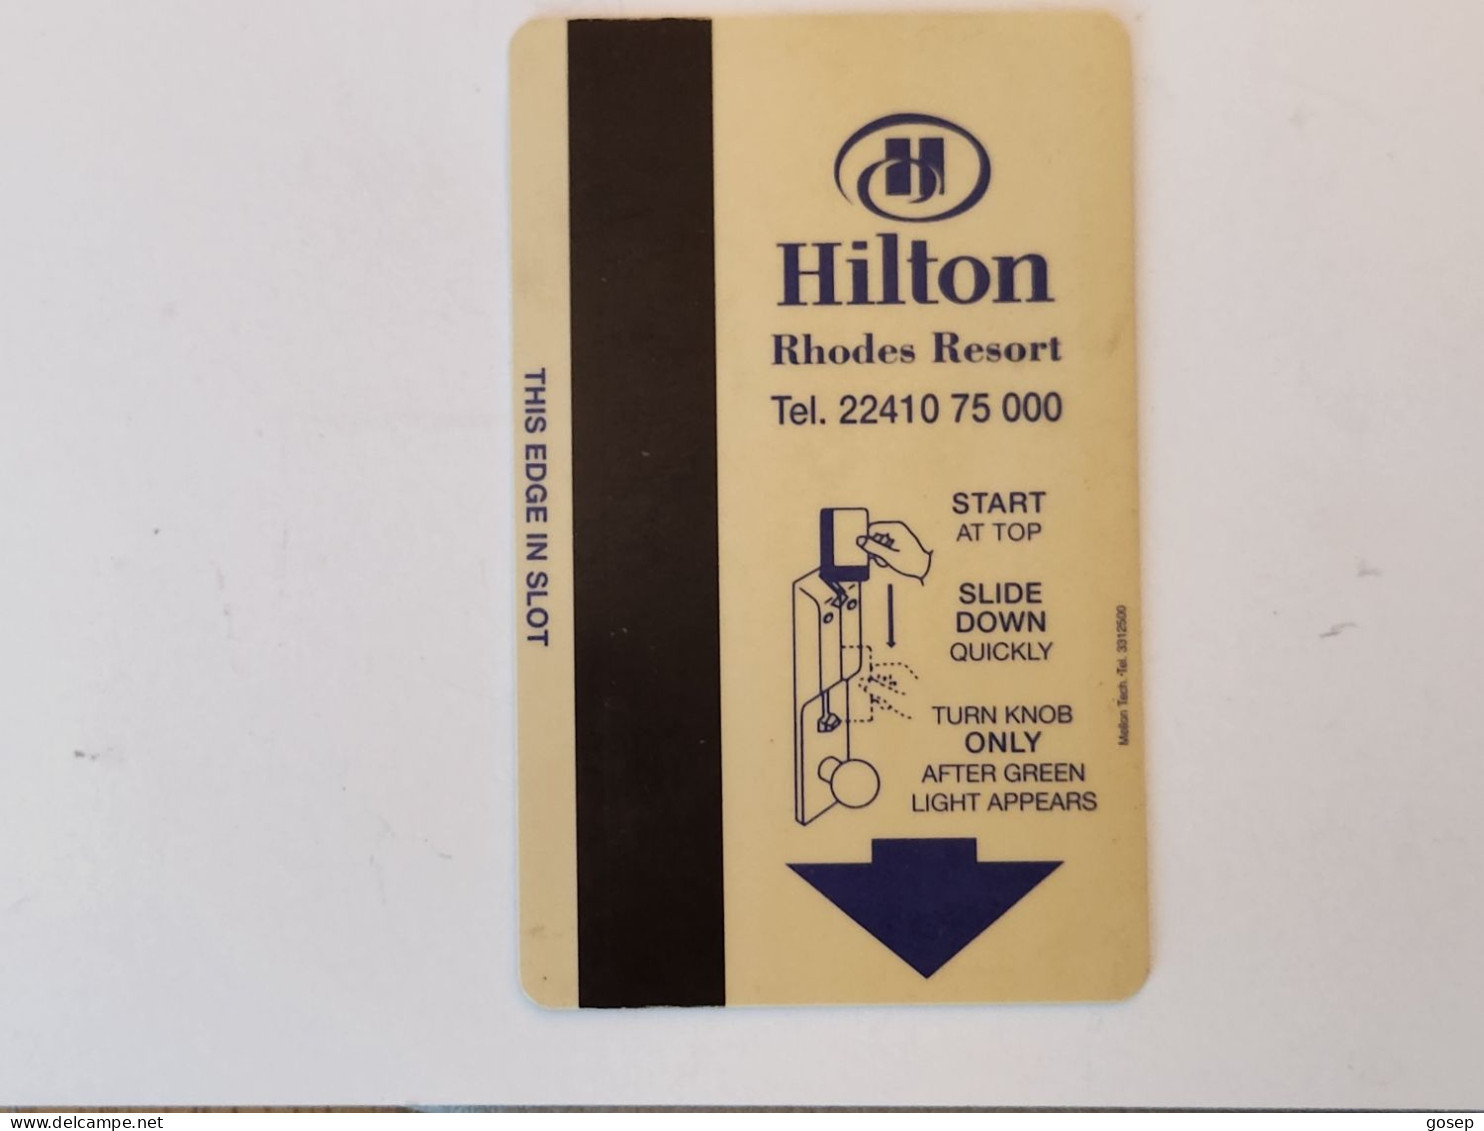 ISRAEL-HILLTON-HOTAL KEY-(1095)(?)GOOD CARD - Chiavi Elettroniche Di Alberghi